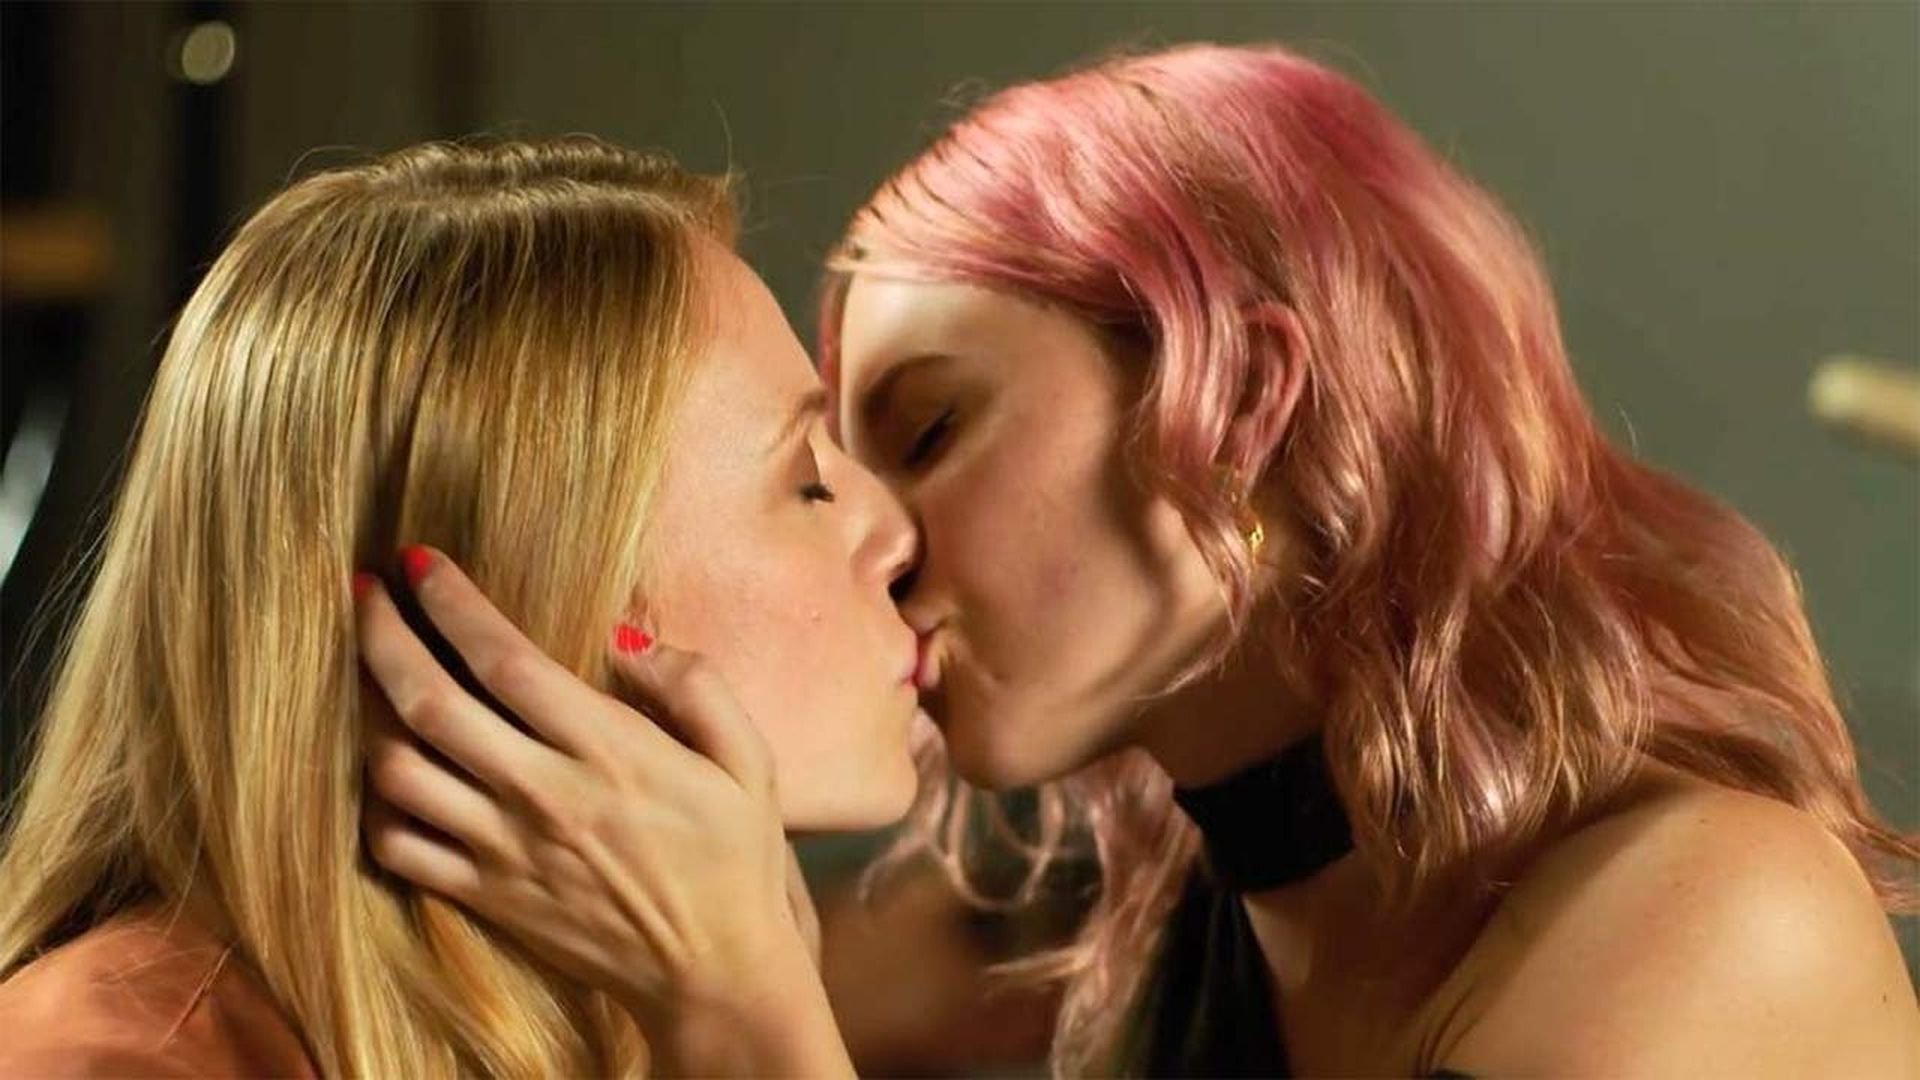 Sexiest lesbian kisses on tv